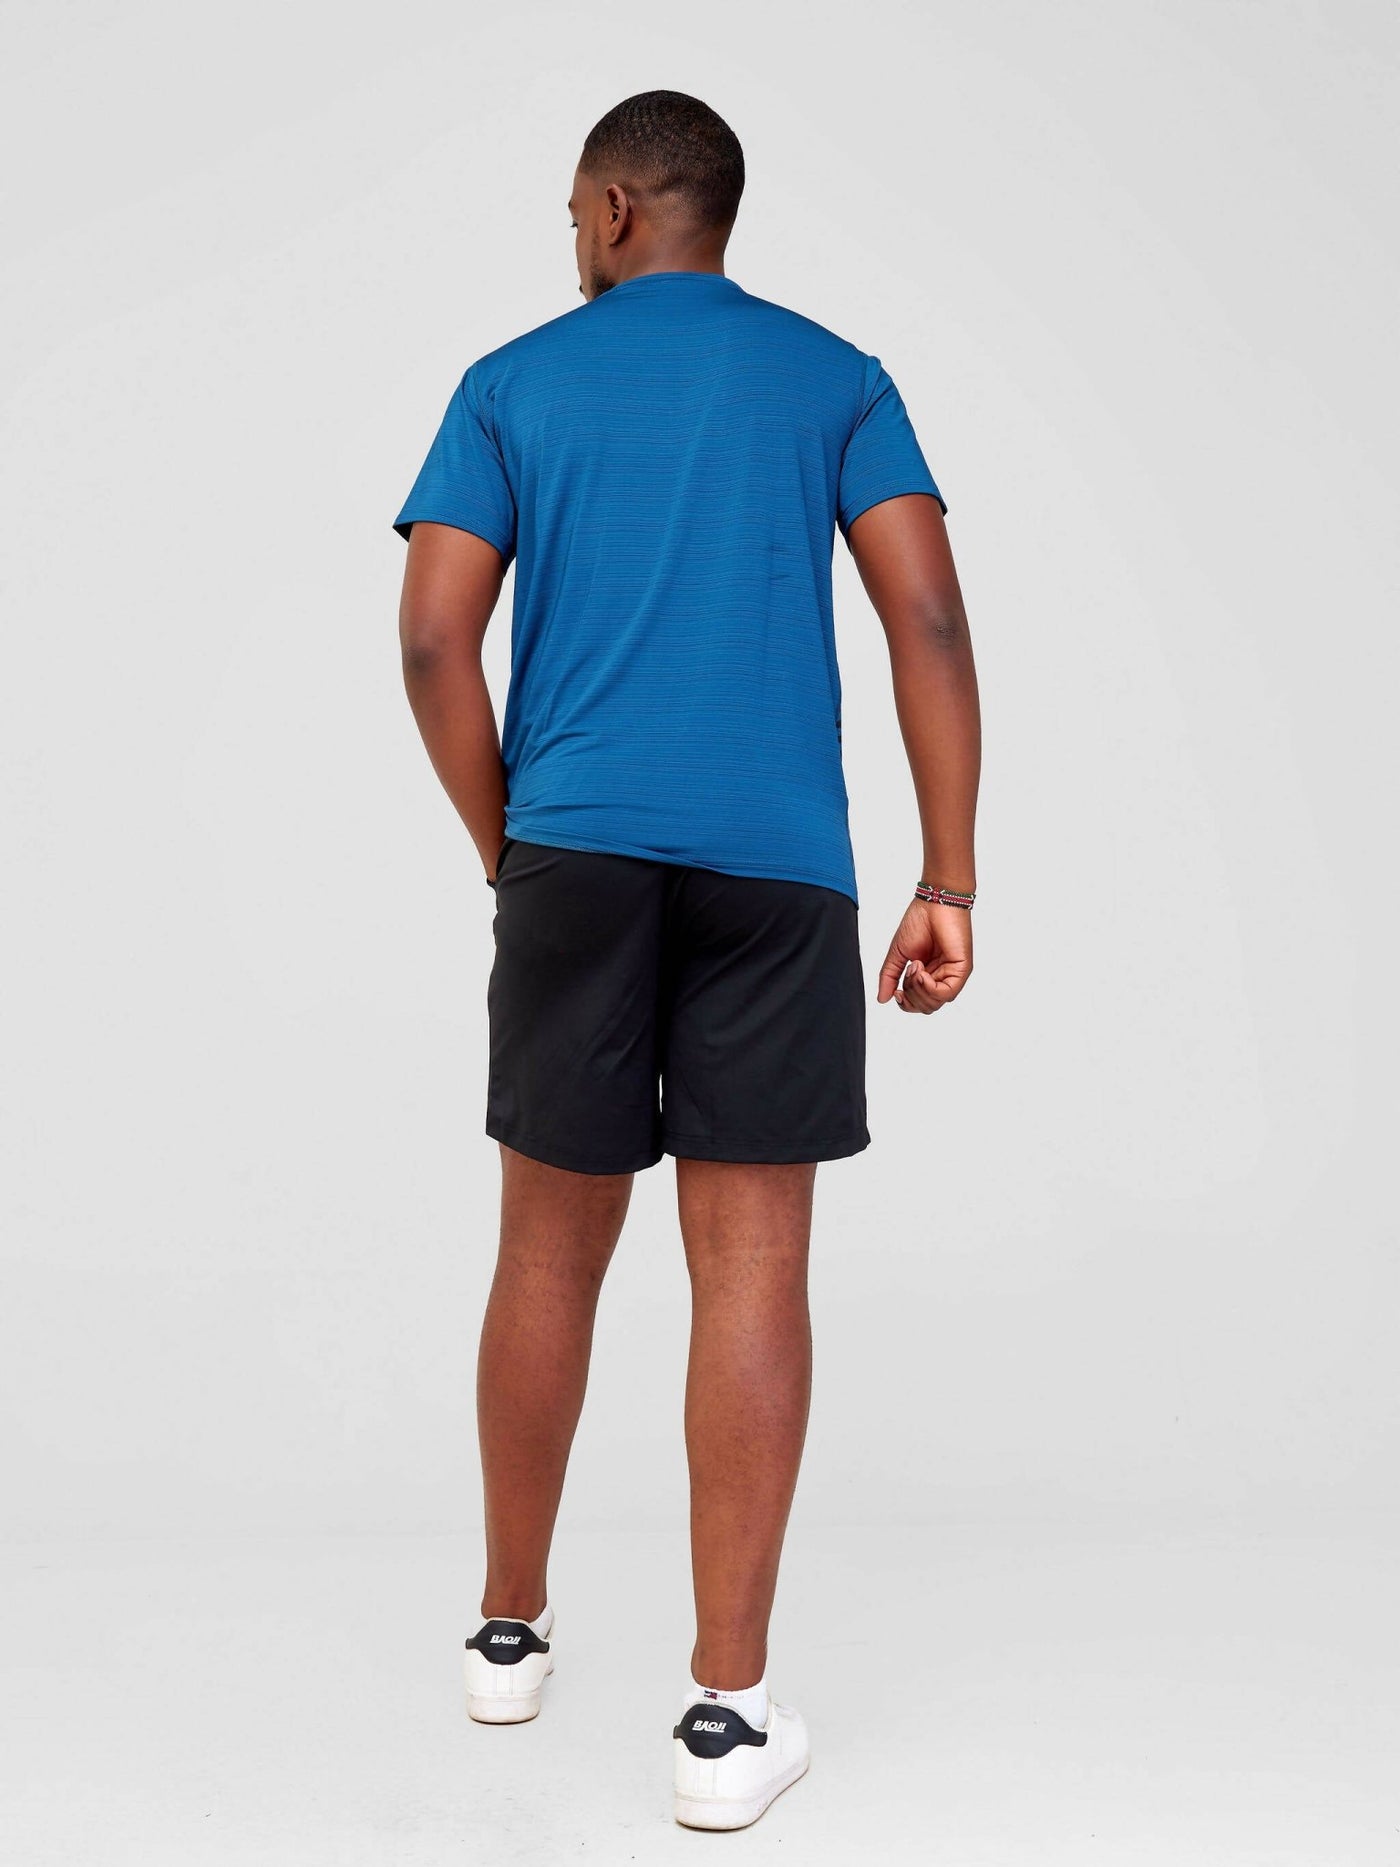 Zaxu Sports Elite Shirt - Blue - Shopzetu